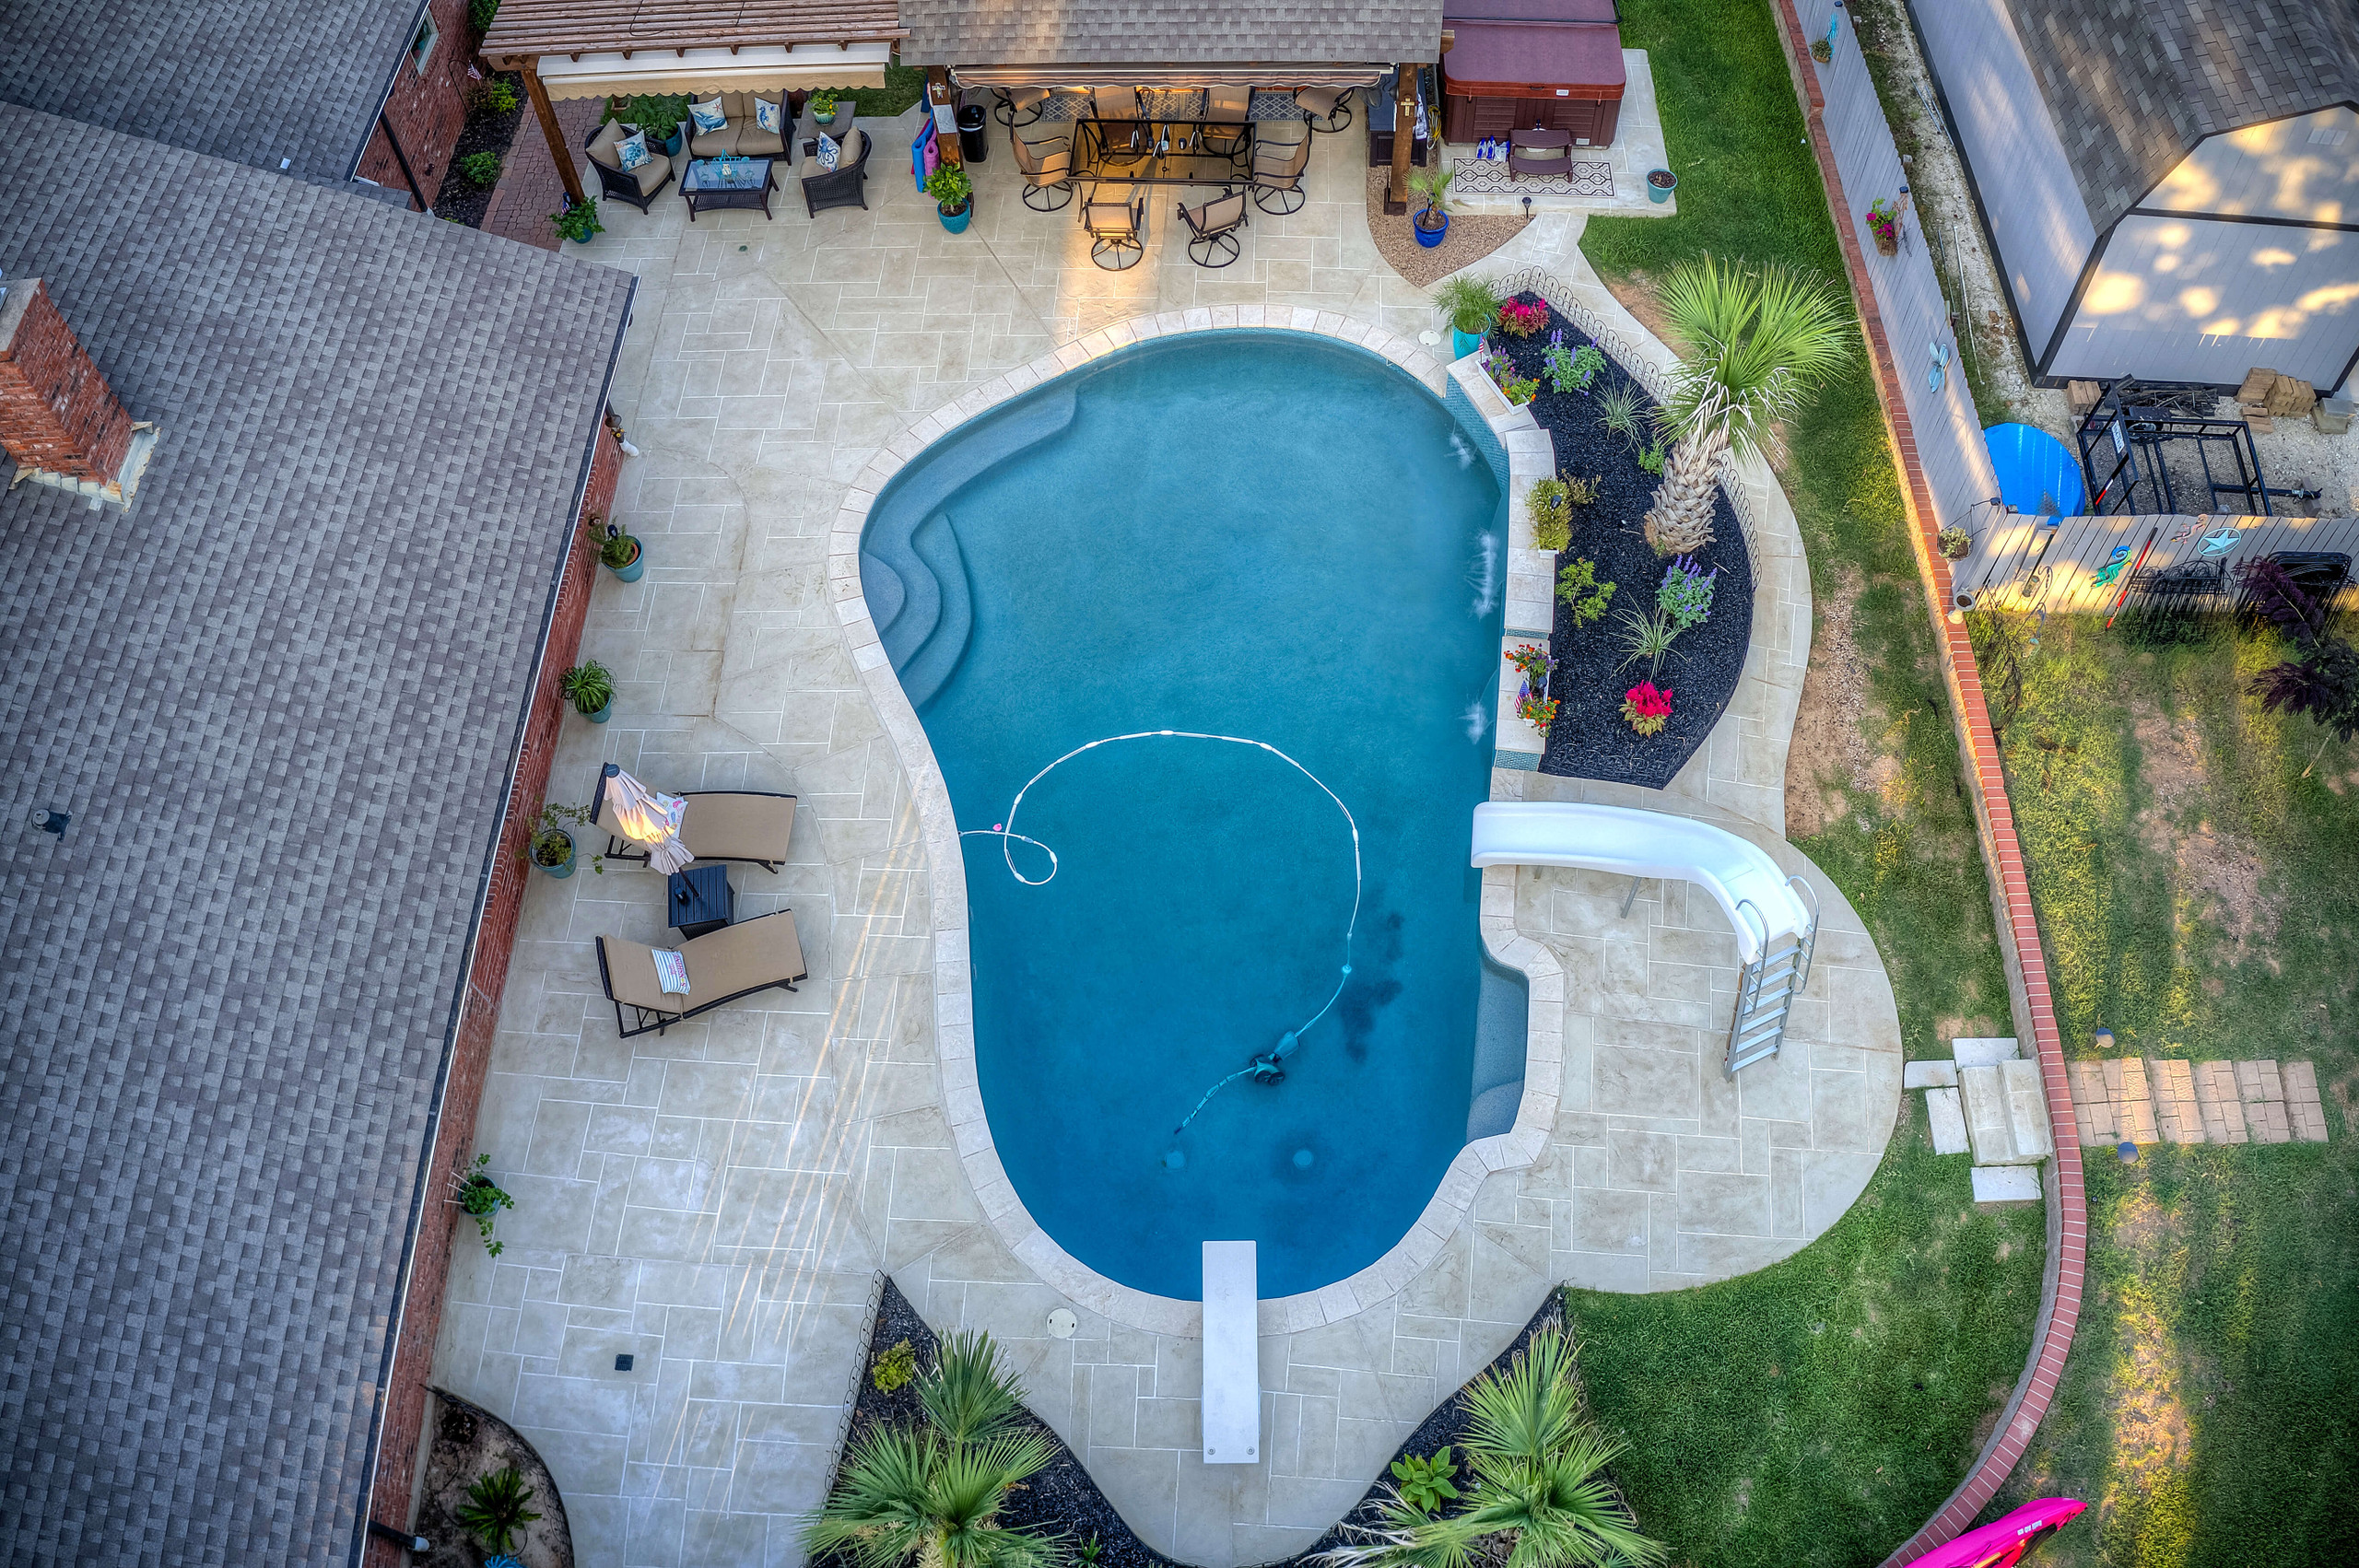 Carvestone pool deck and custom freeform backyard pool